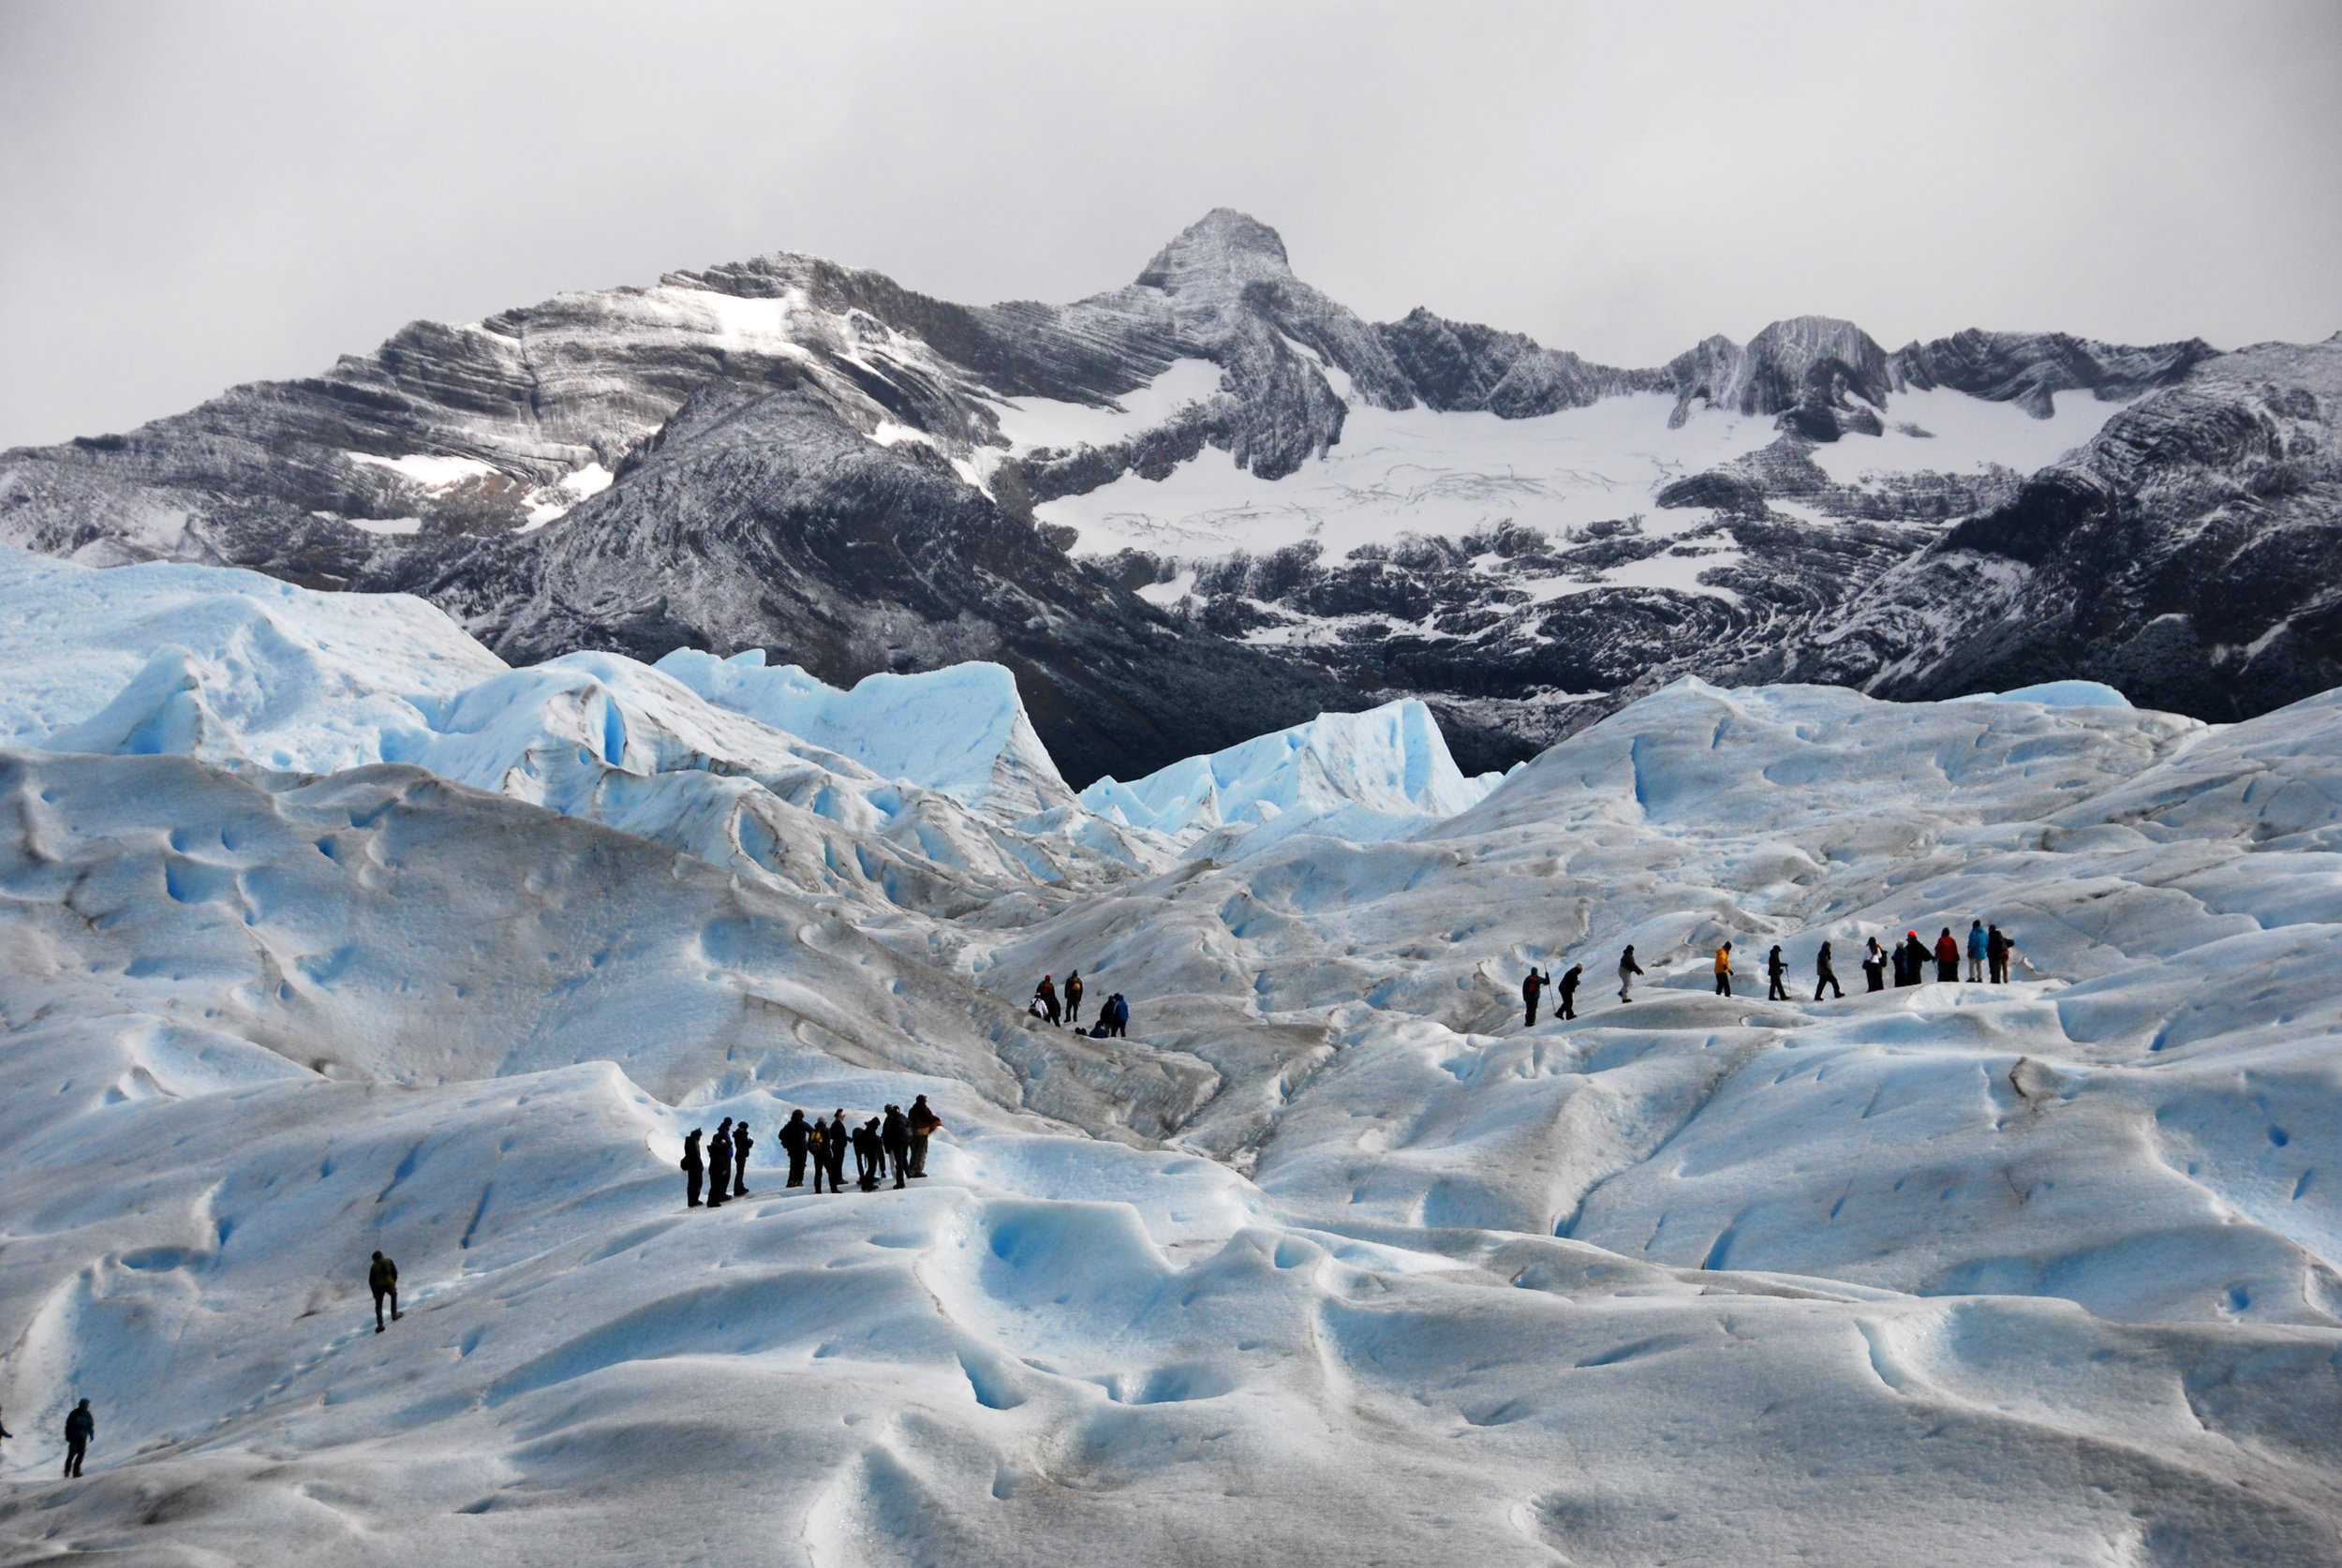 PICTURED: Hikers on Perito Merino Glacier - Big Ice tour, Glaciers National Park, El Calafate, Argentina